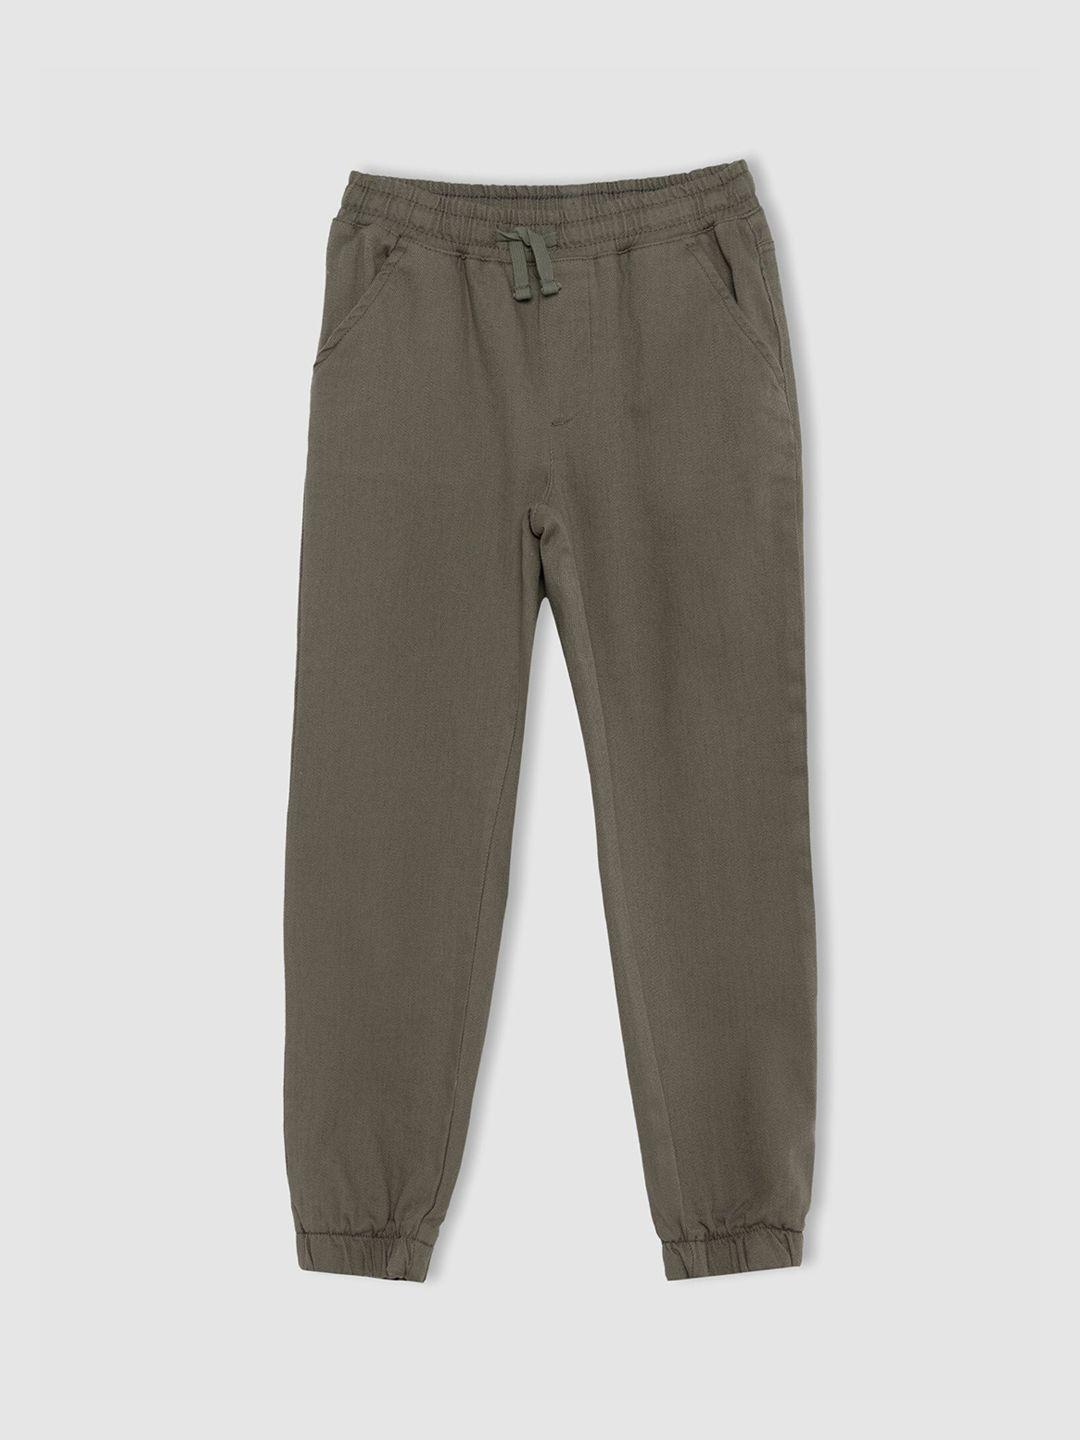 defacto-boys-khaki-joggers-cotton-trousers